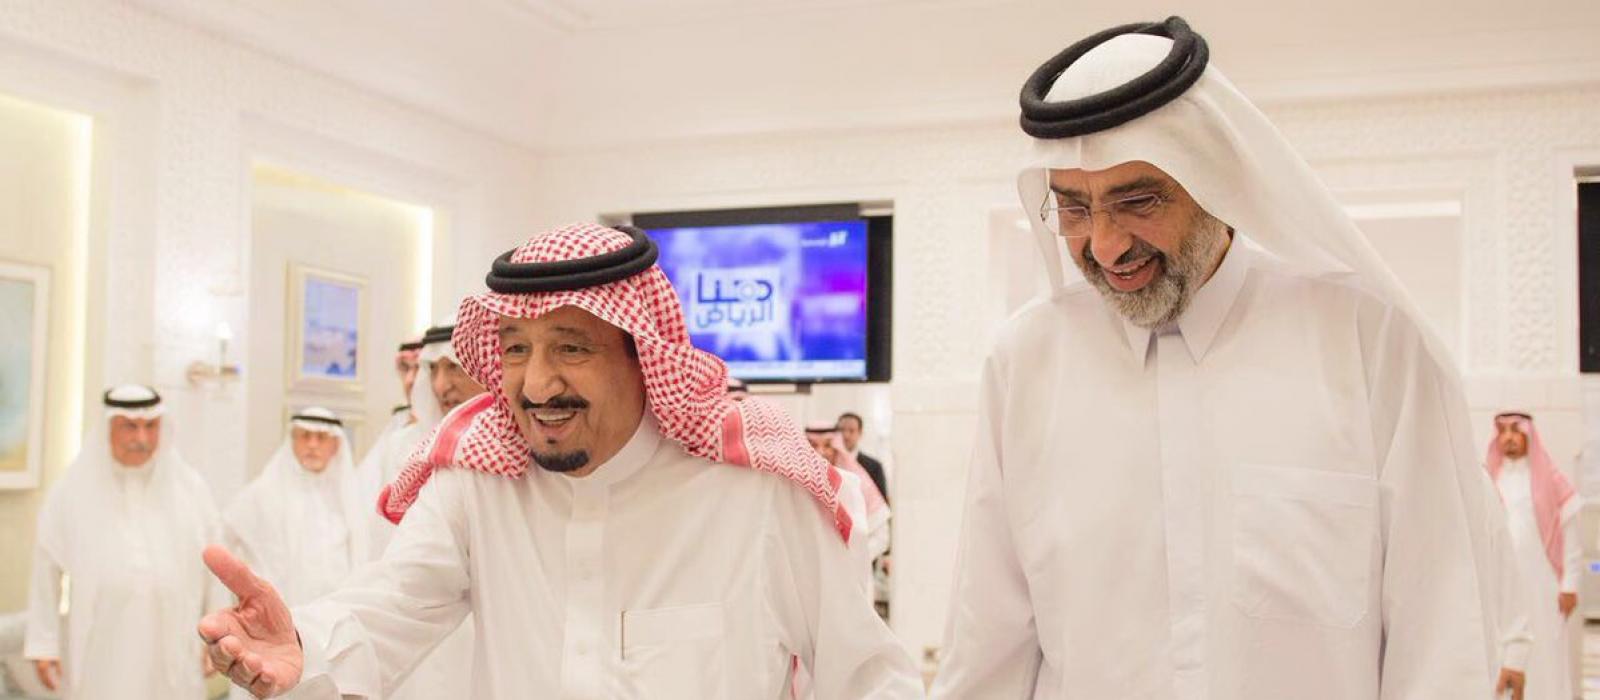 دیدار عضو خاندان حاکم قطر با ملک سلمان؛ کودتا یا مصالحه؟